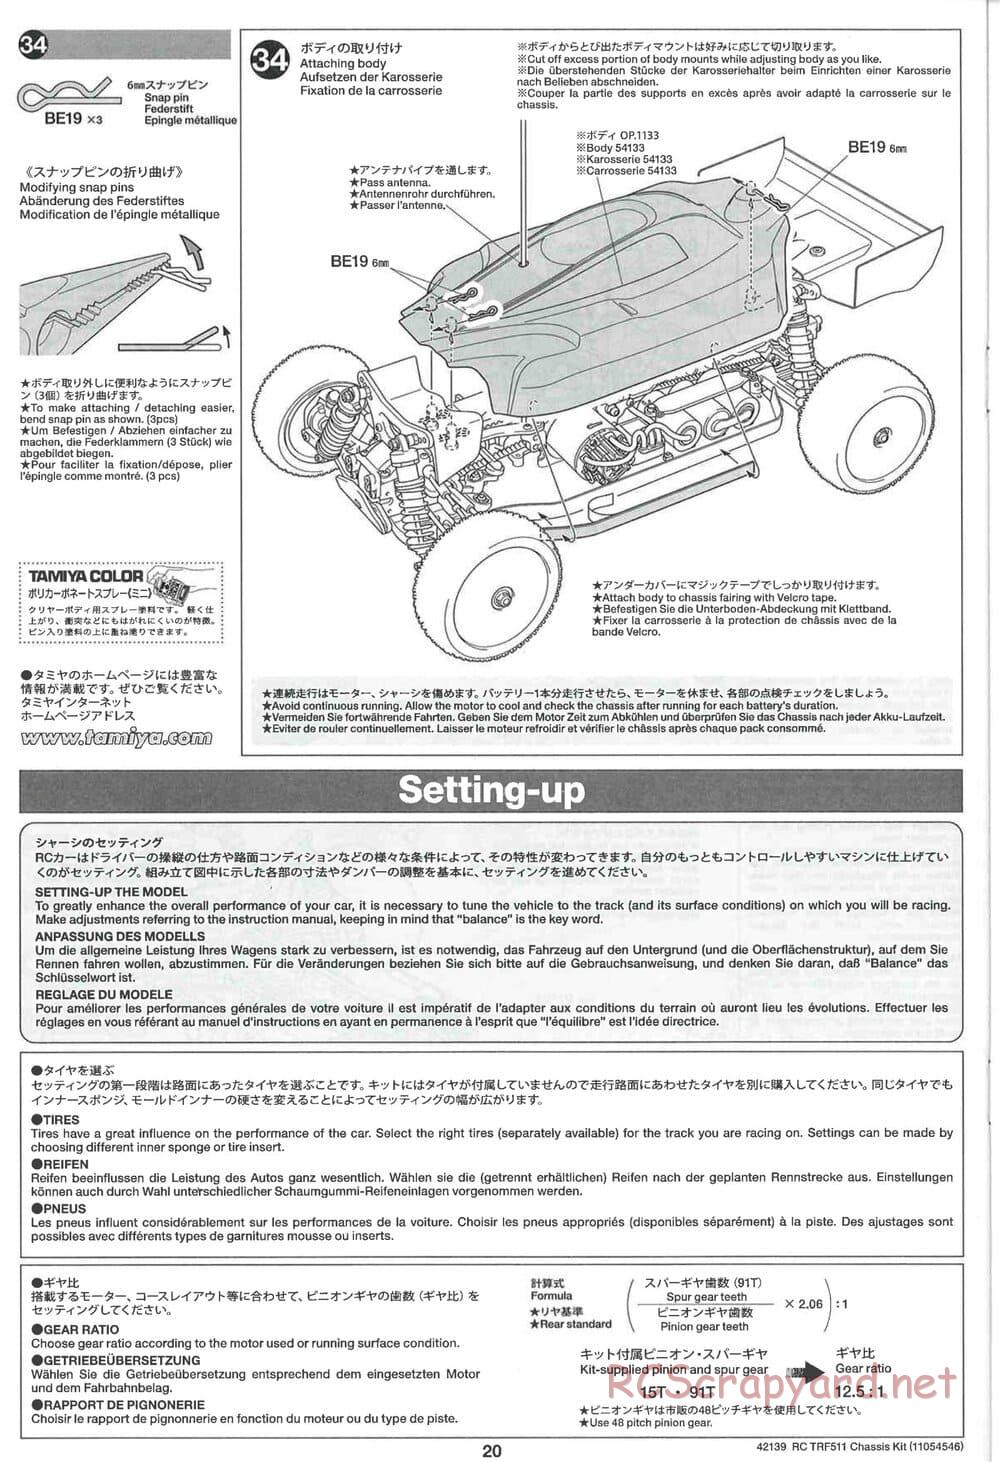 Tamiya - TRF511 Chassis - Manual - Page 20